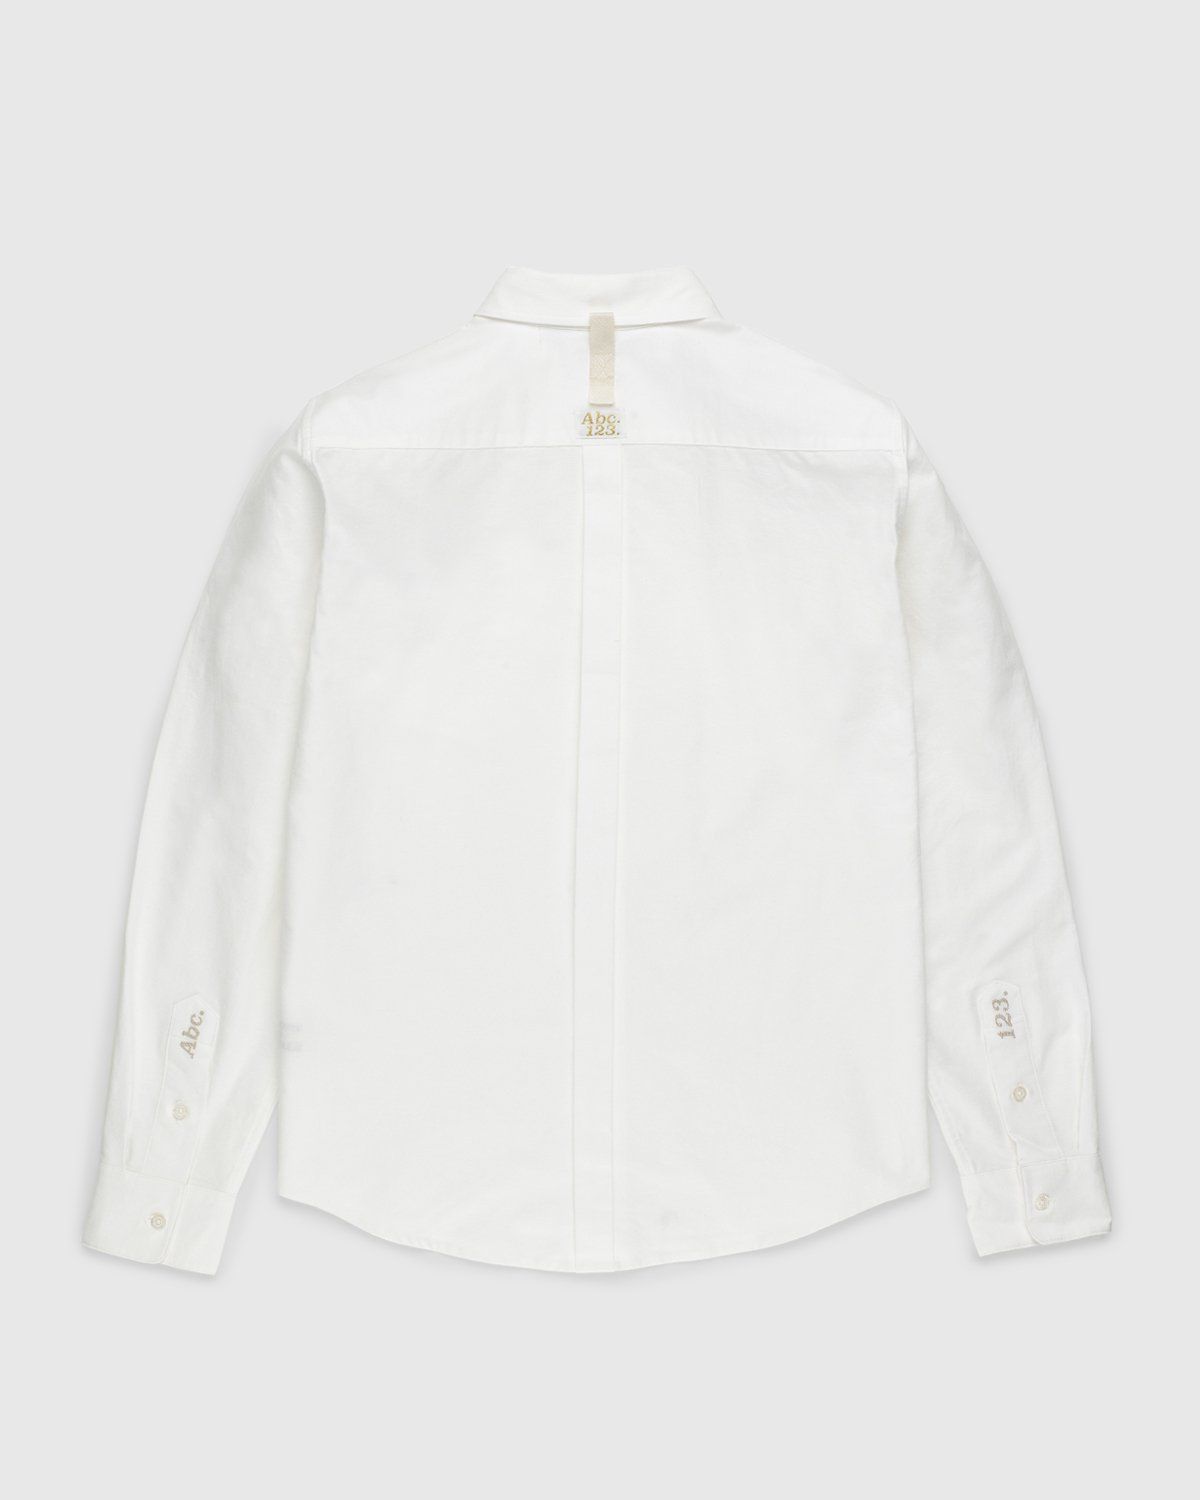 Abc. – Oxford Woven Shirt Selenite - Shirts - White - Image 2